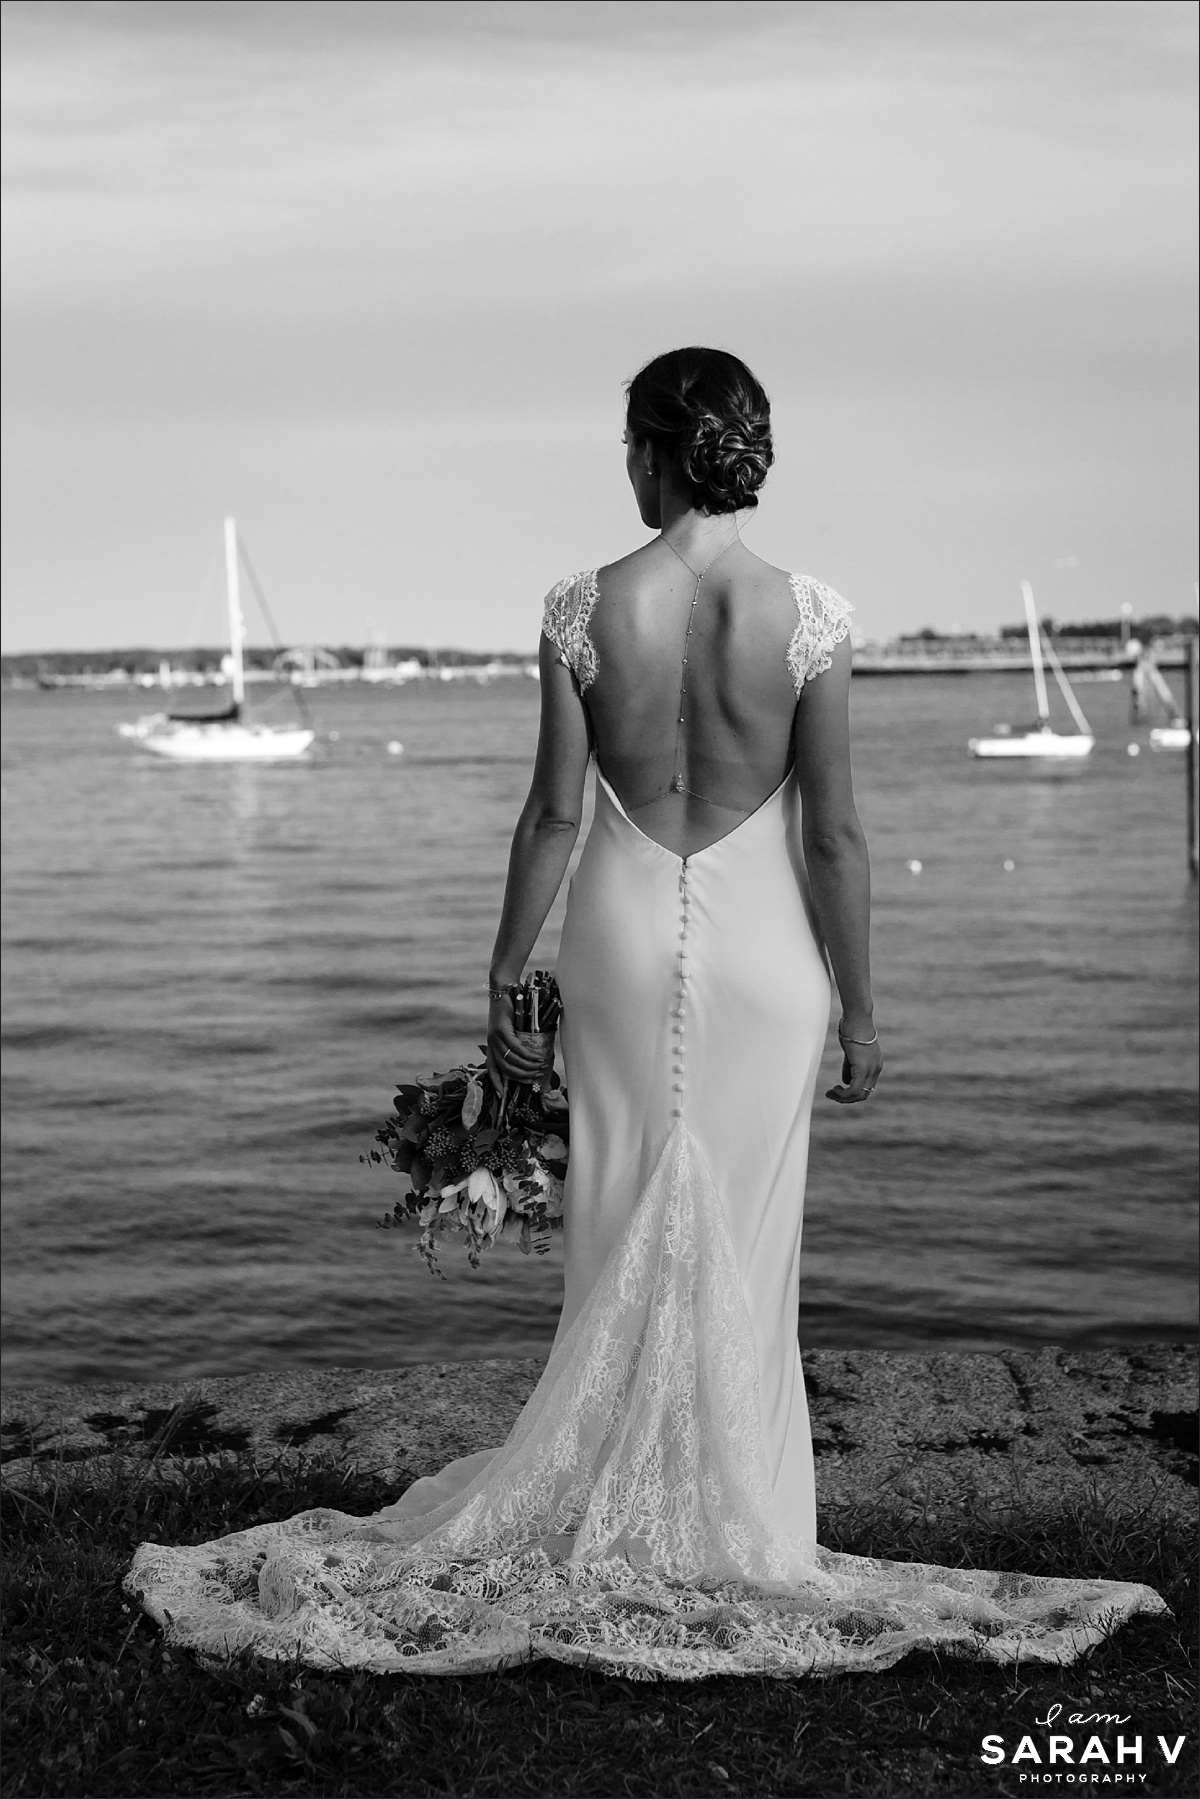 Portland Maine Wedding Photographer Cape Elizabeth Fort Williams Ocean Portland Company Photo / I AM SARAH V Photography